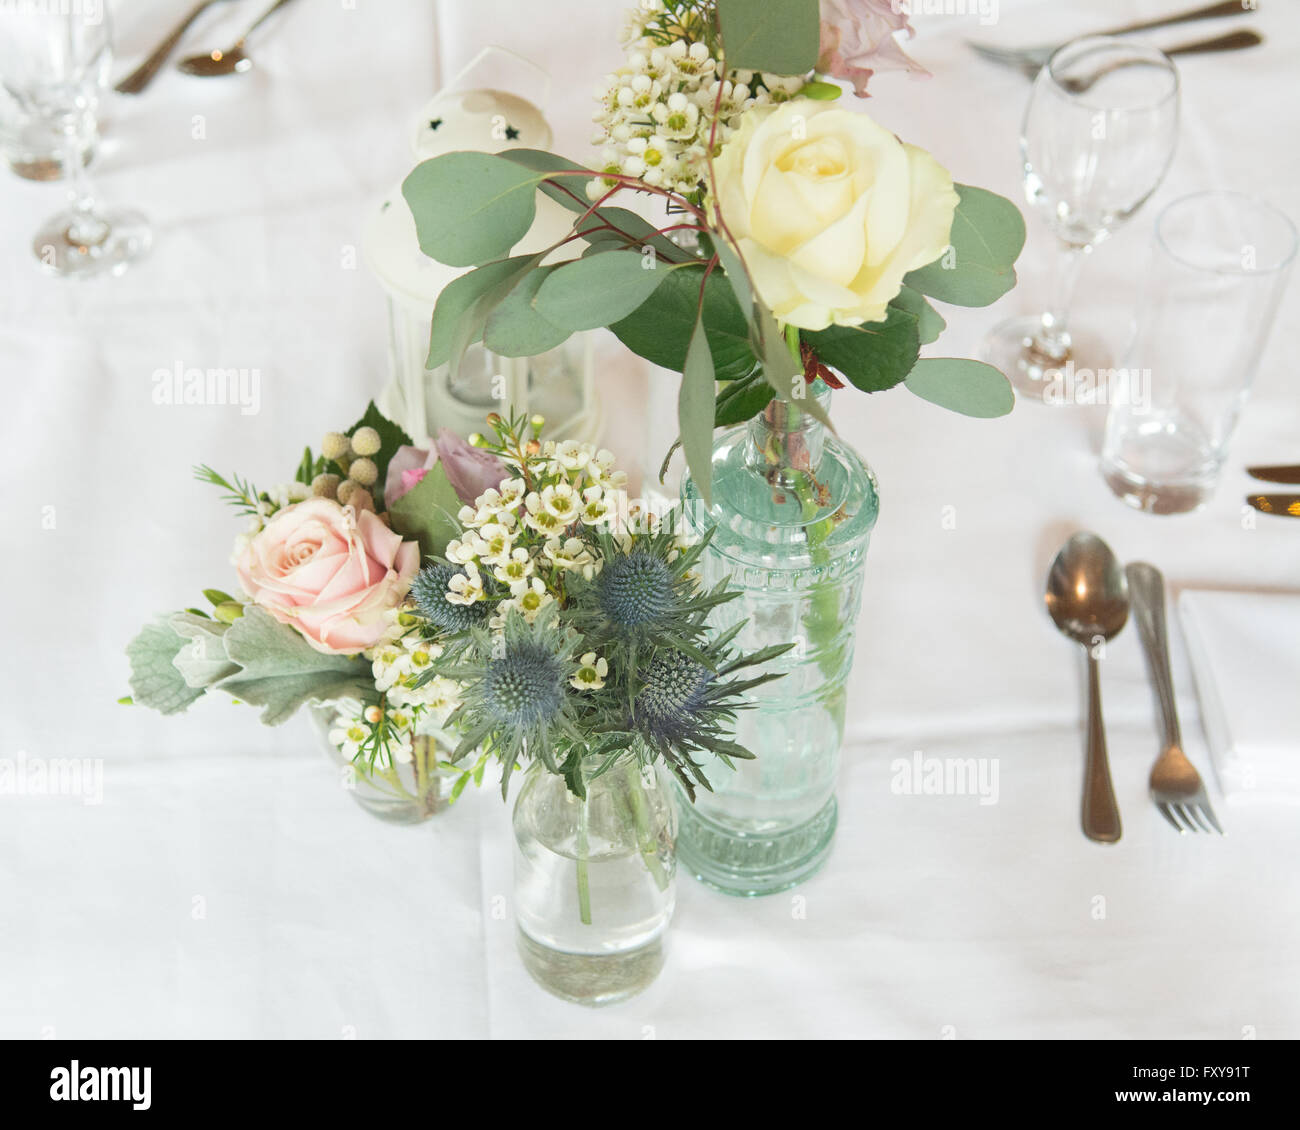 Table set for wedding or event with informal flower arrangements in vintage bottles Stock Photo